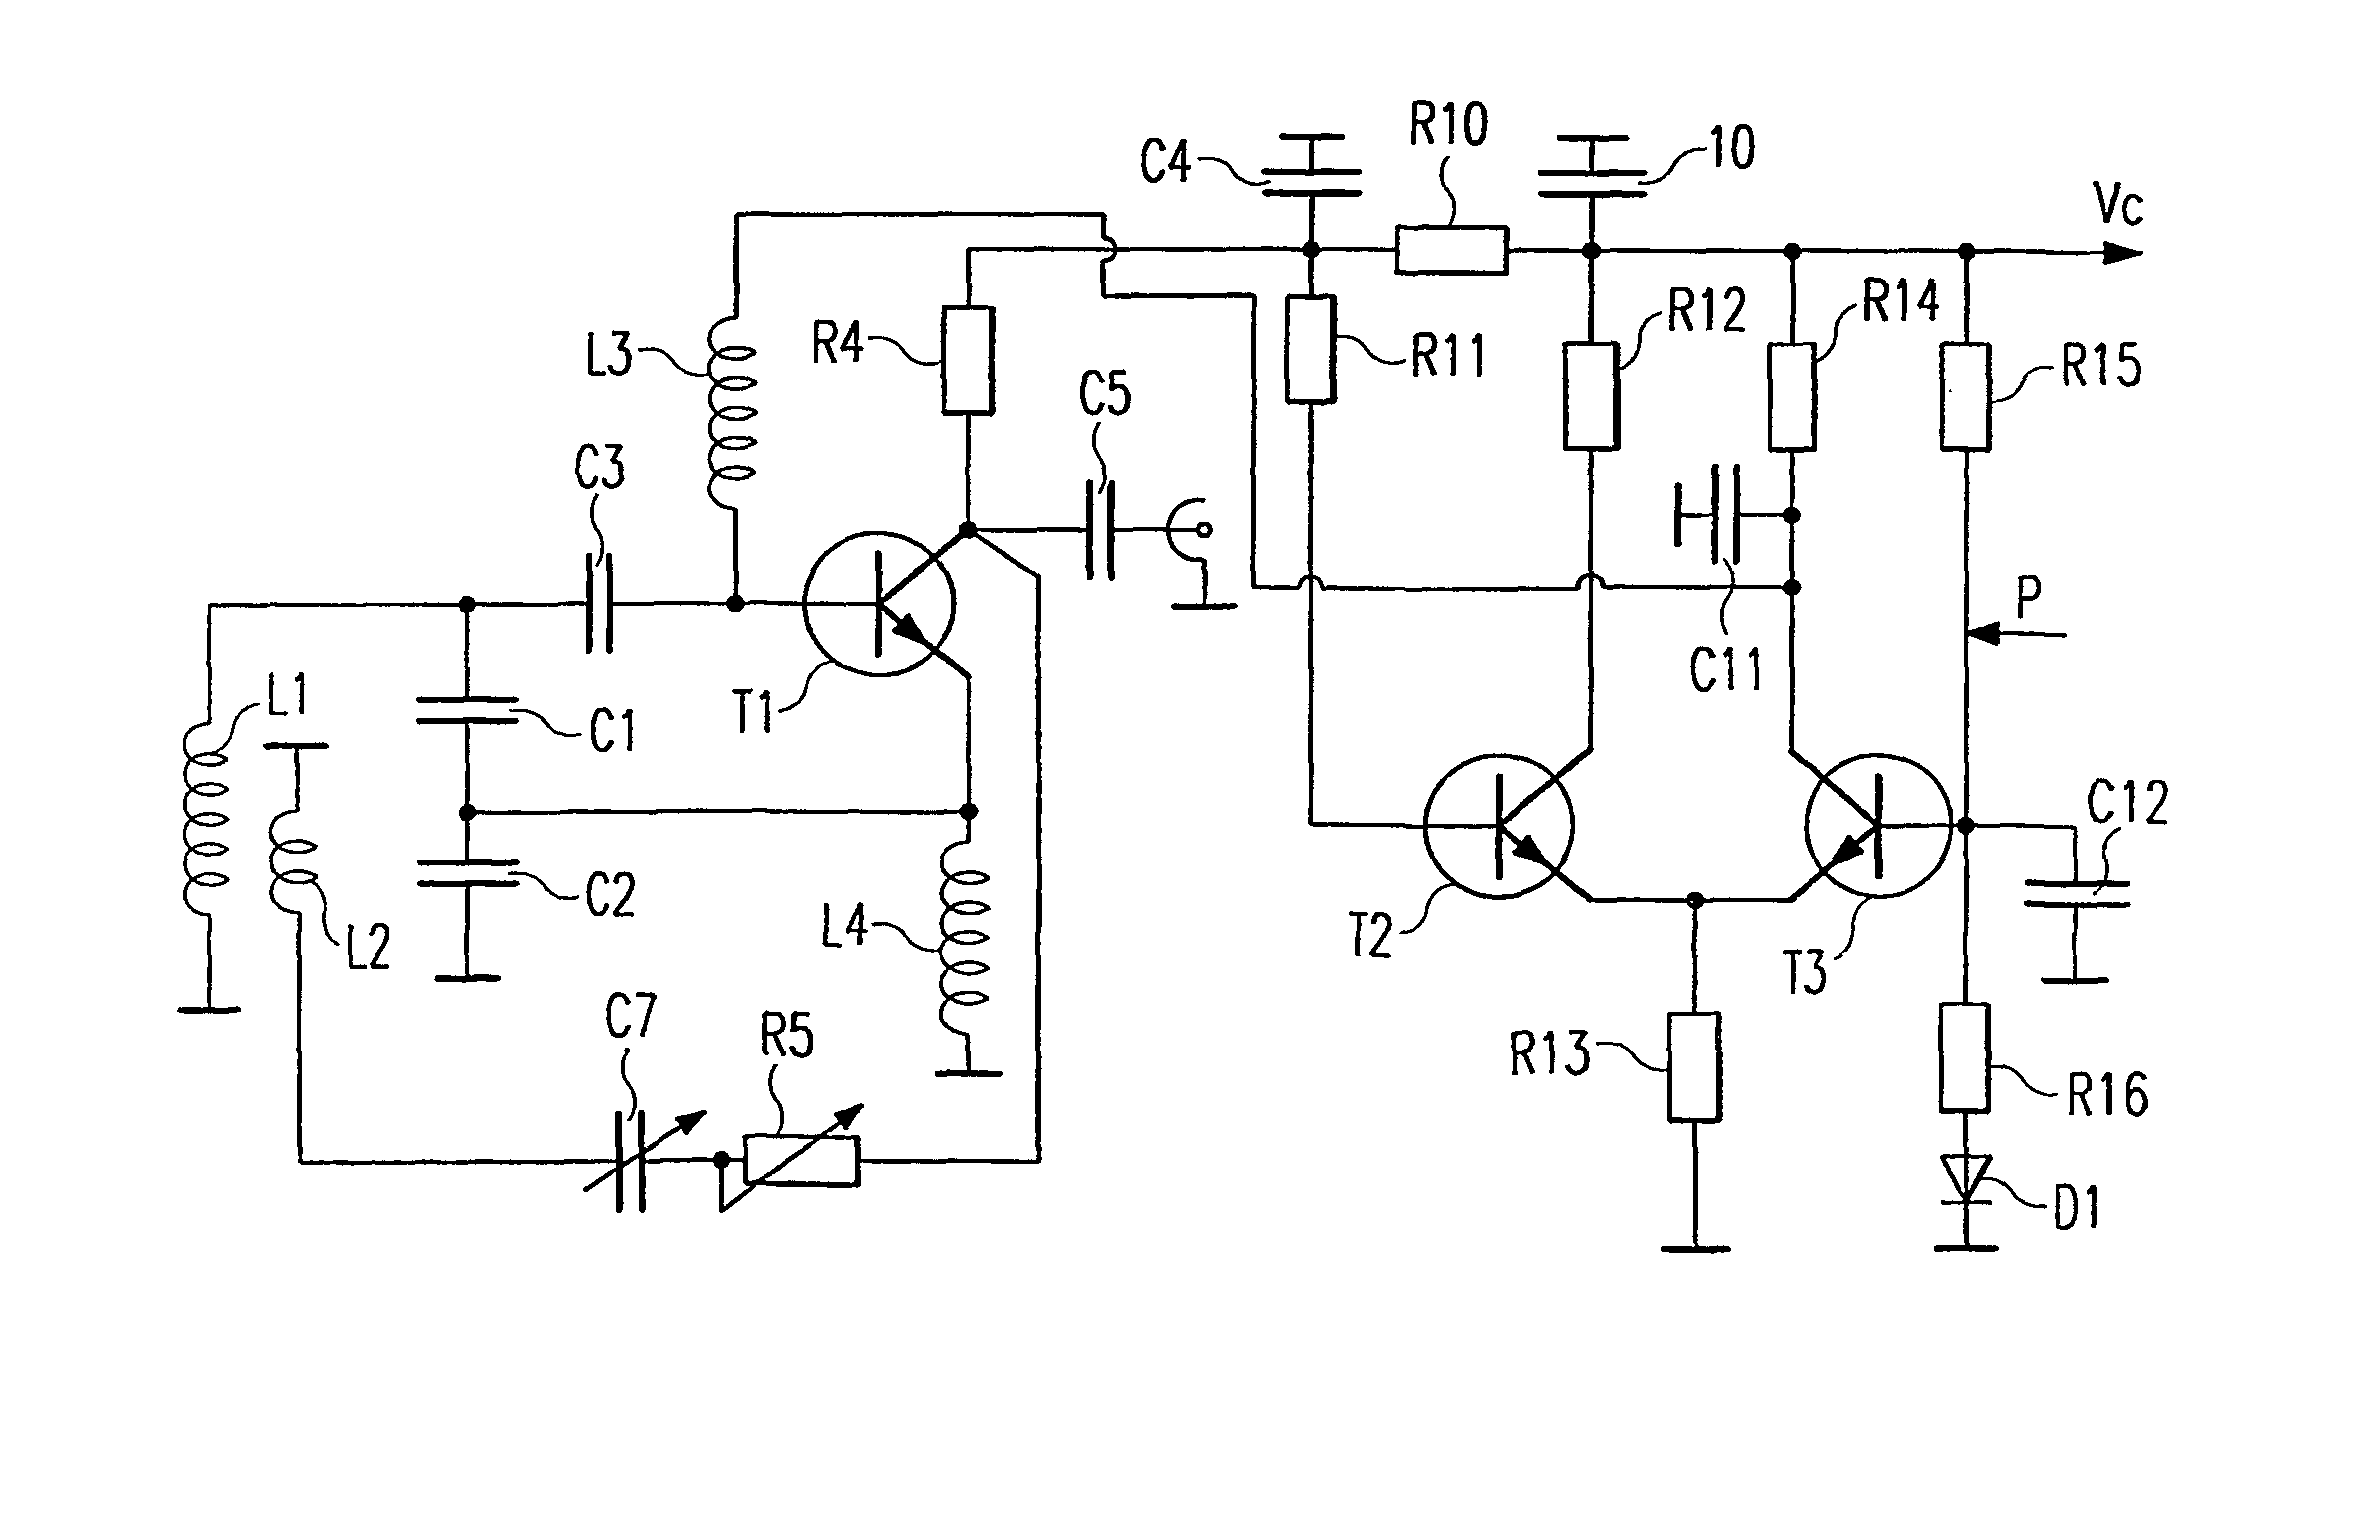 Oscillator circuit configuration